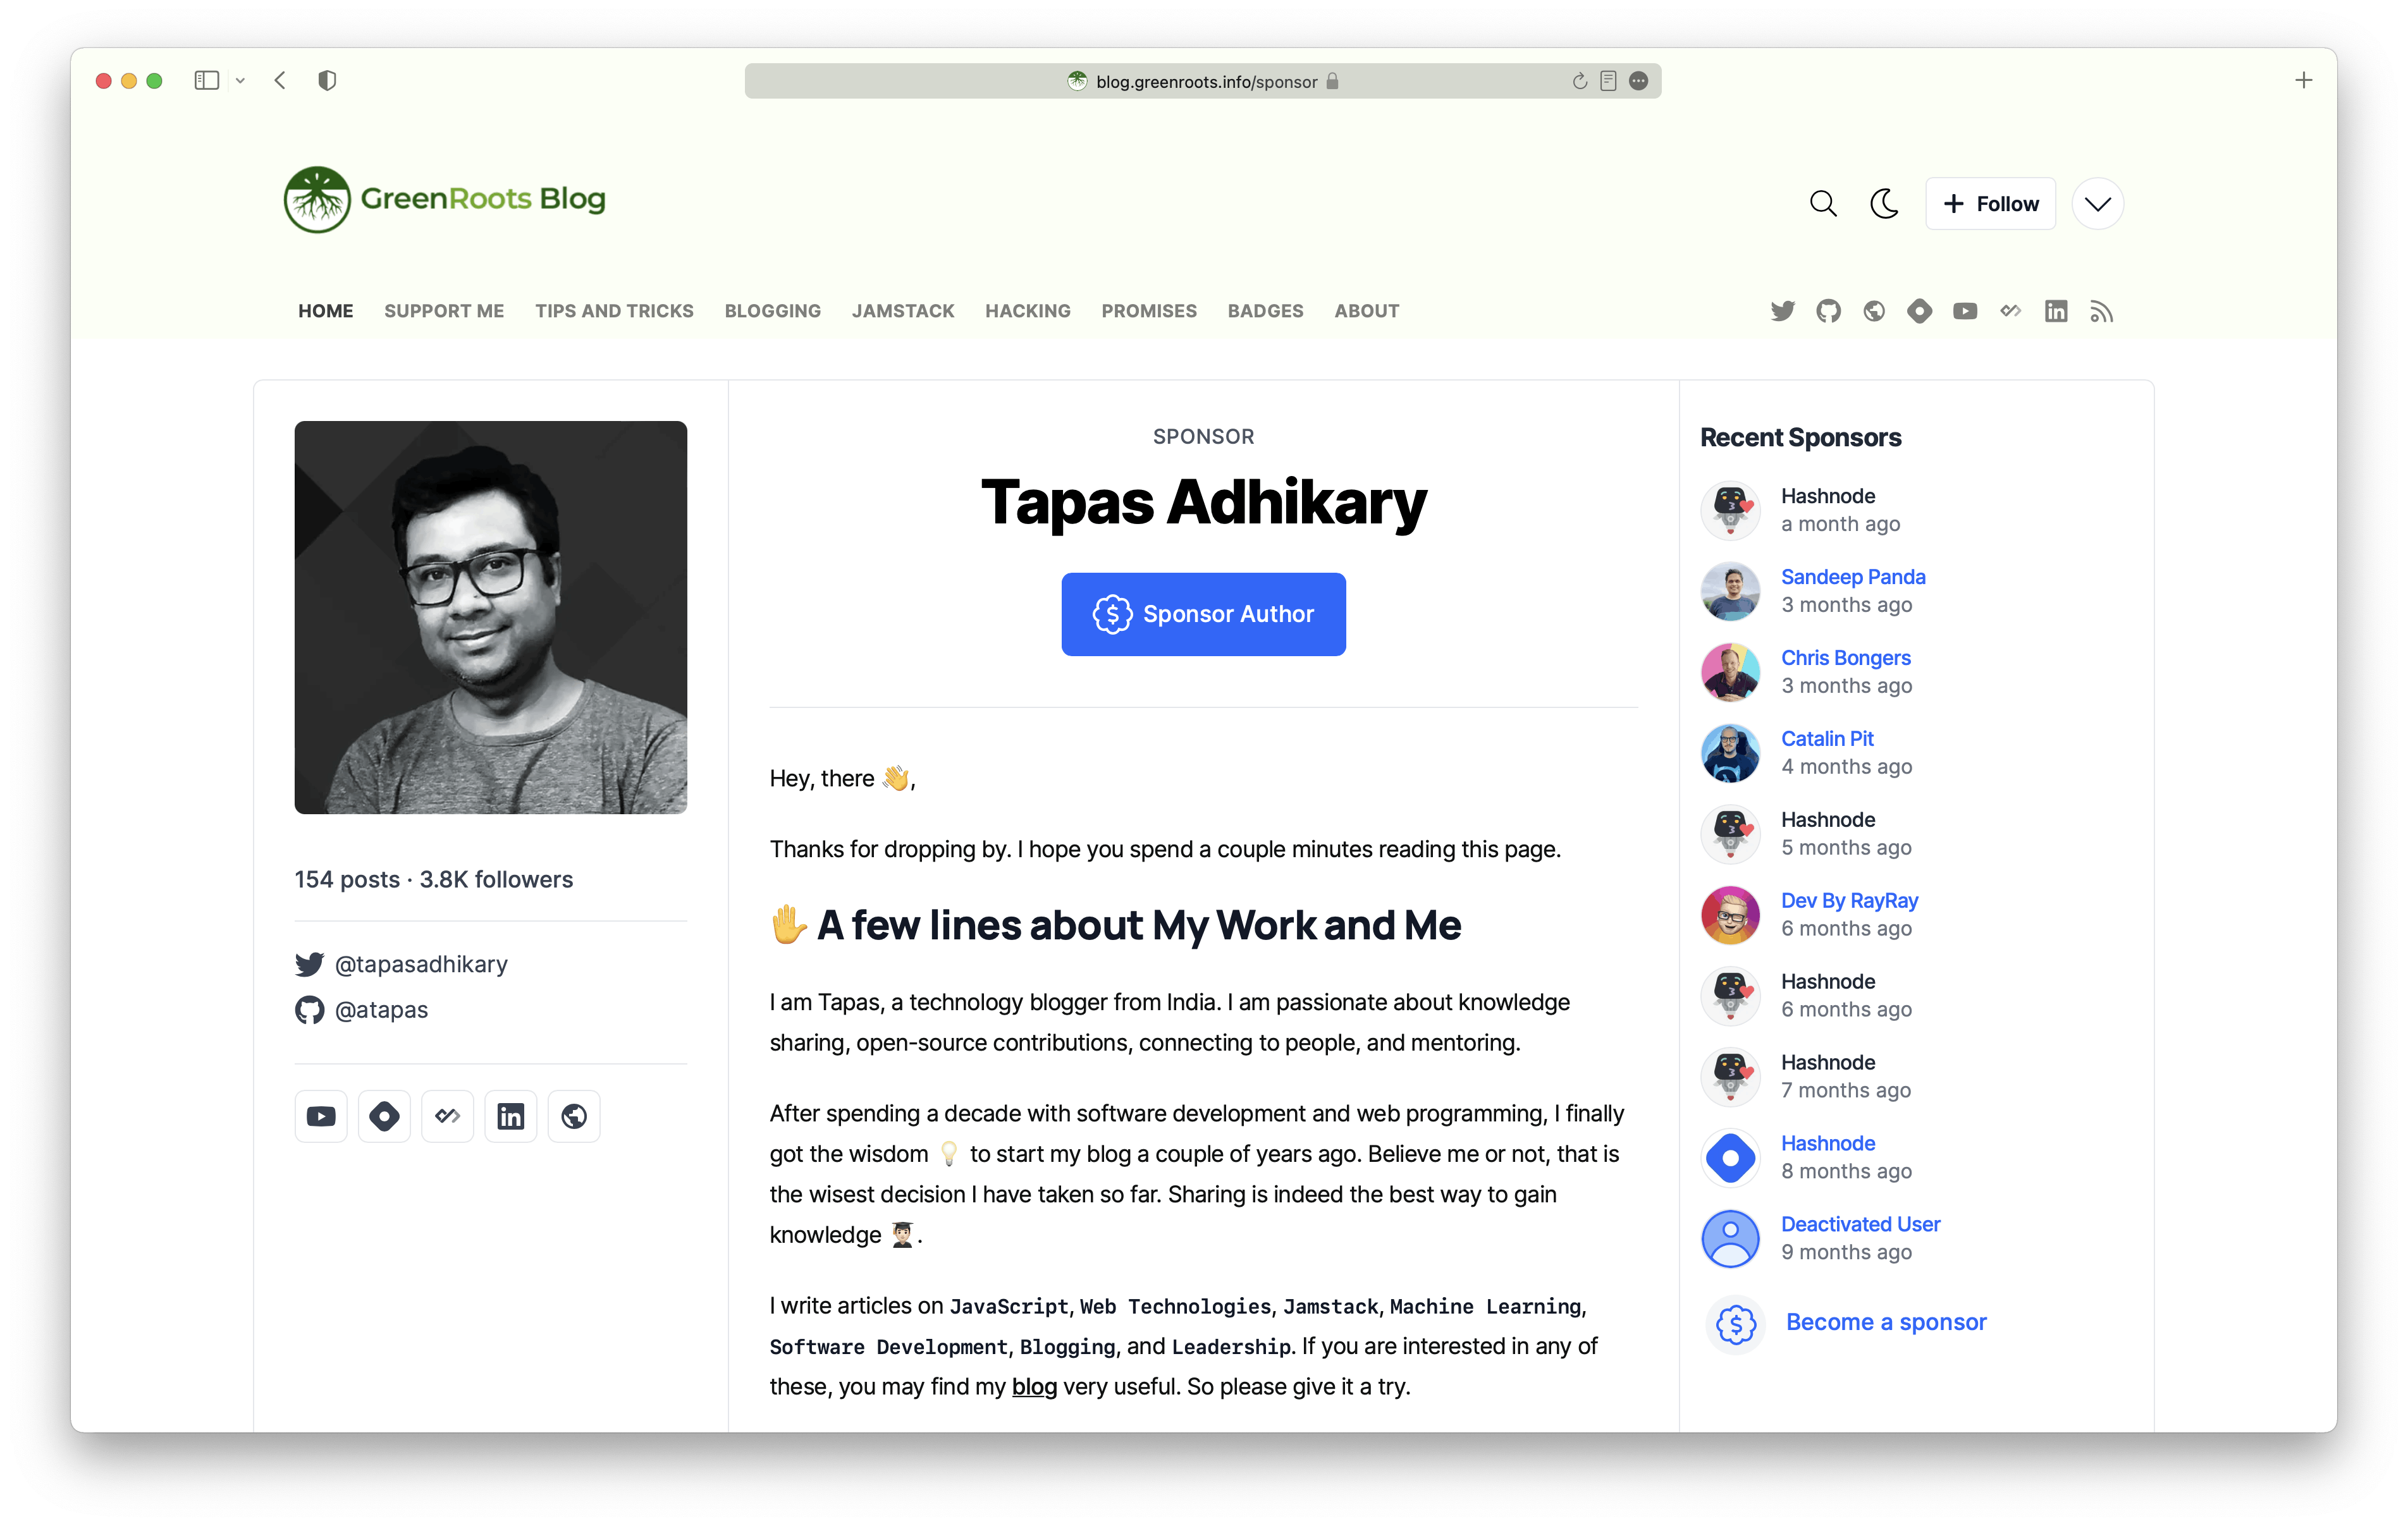 Blog by Tapas Adhikary